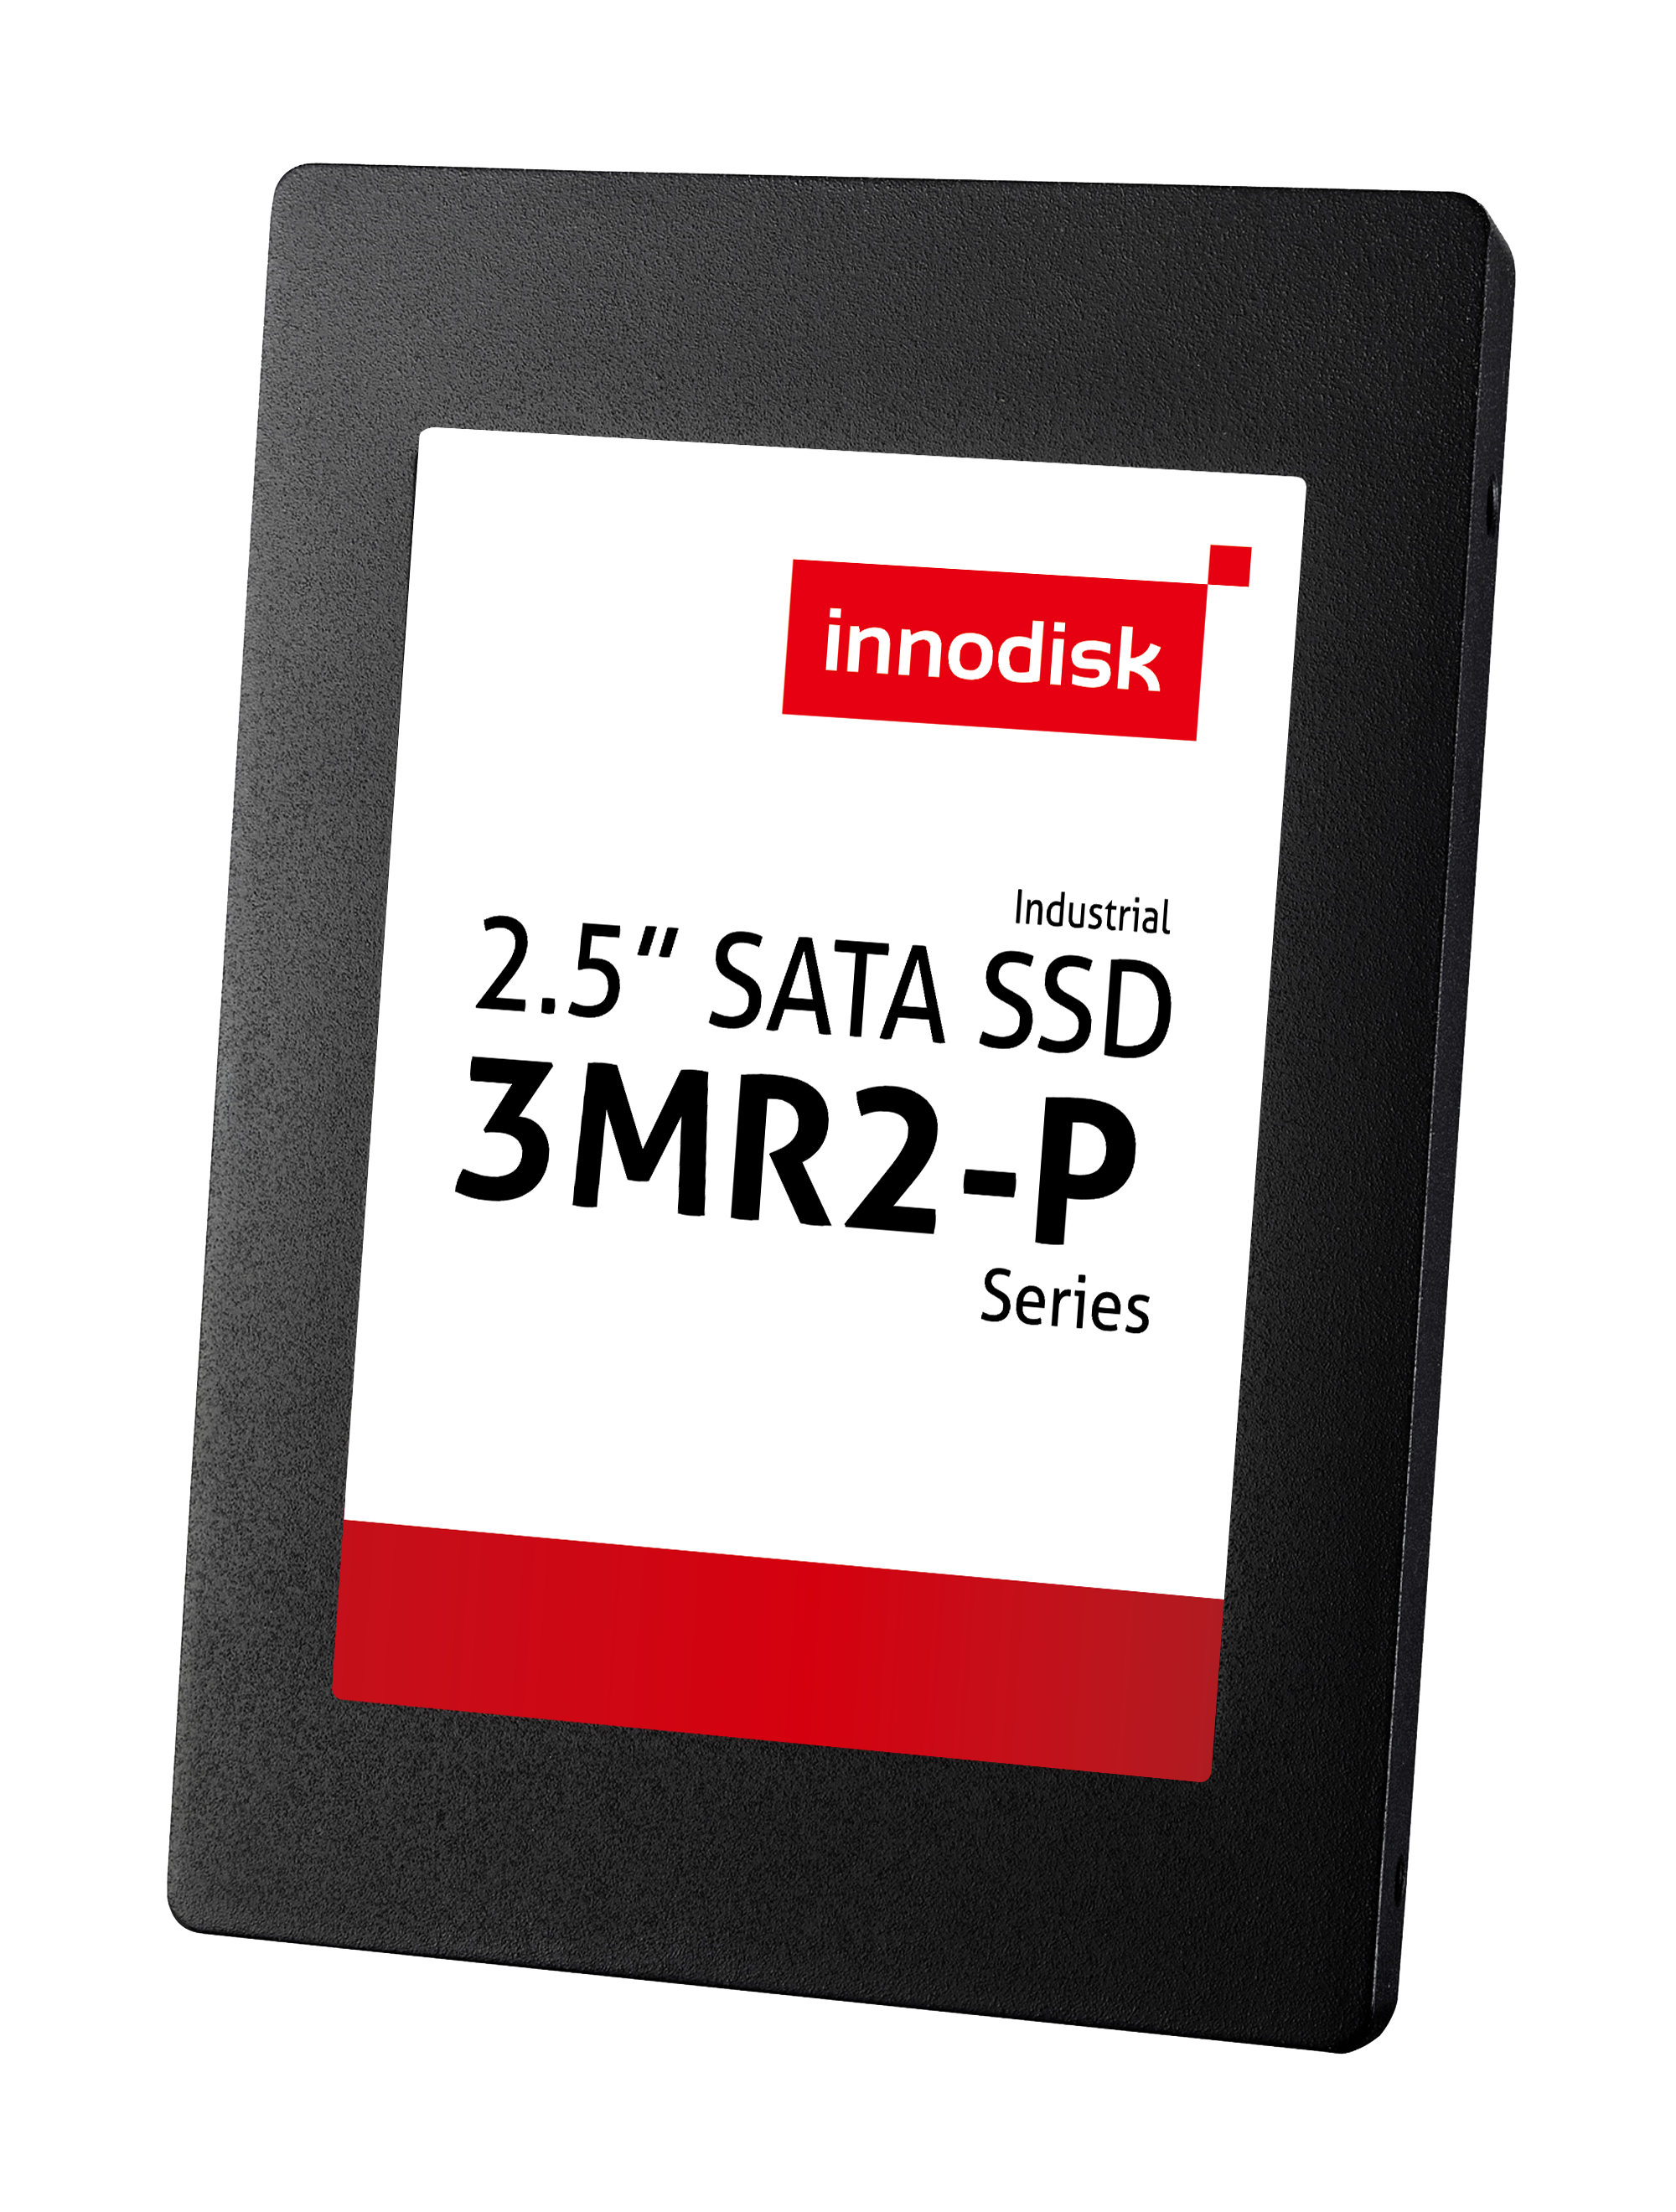 2.5" SATA SSD, InnoRobust, 3MR2-P,MLC